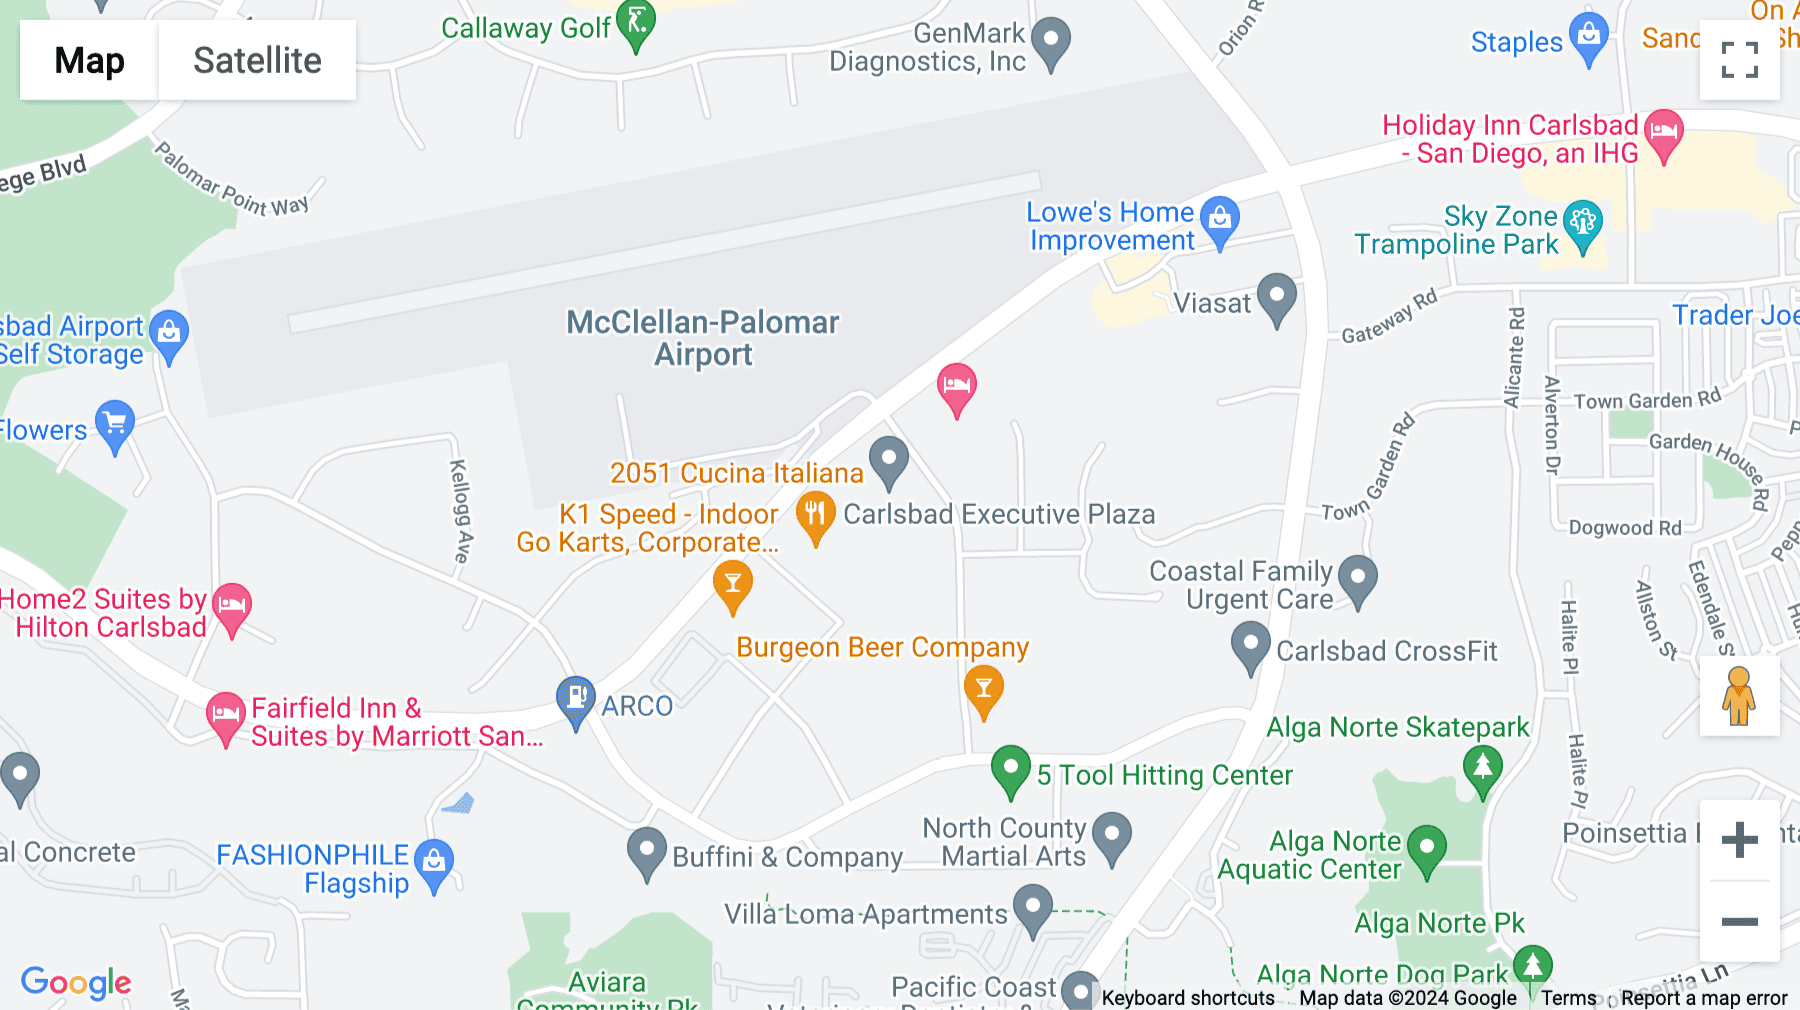 Click for interative map of 2131 Palomar Airport Road, Carlsbad